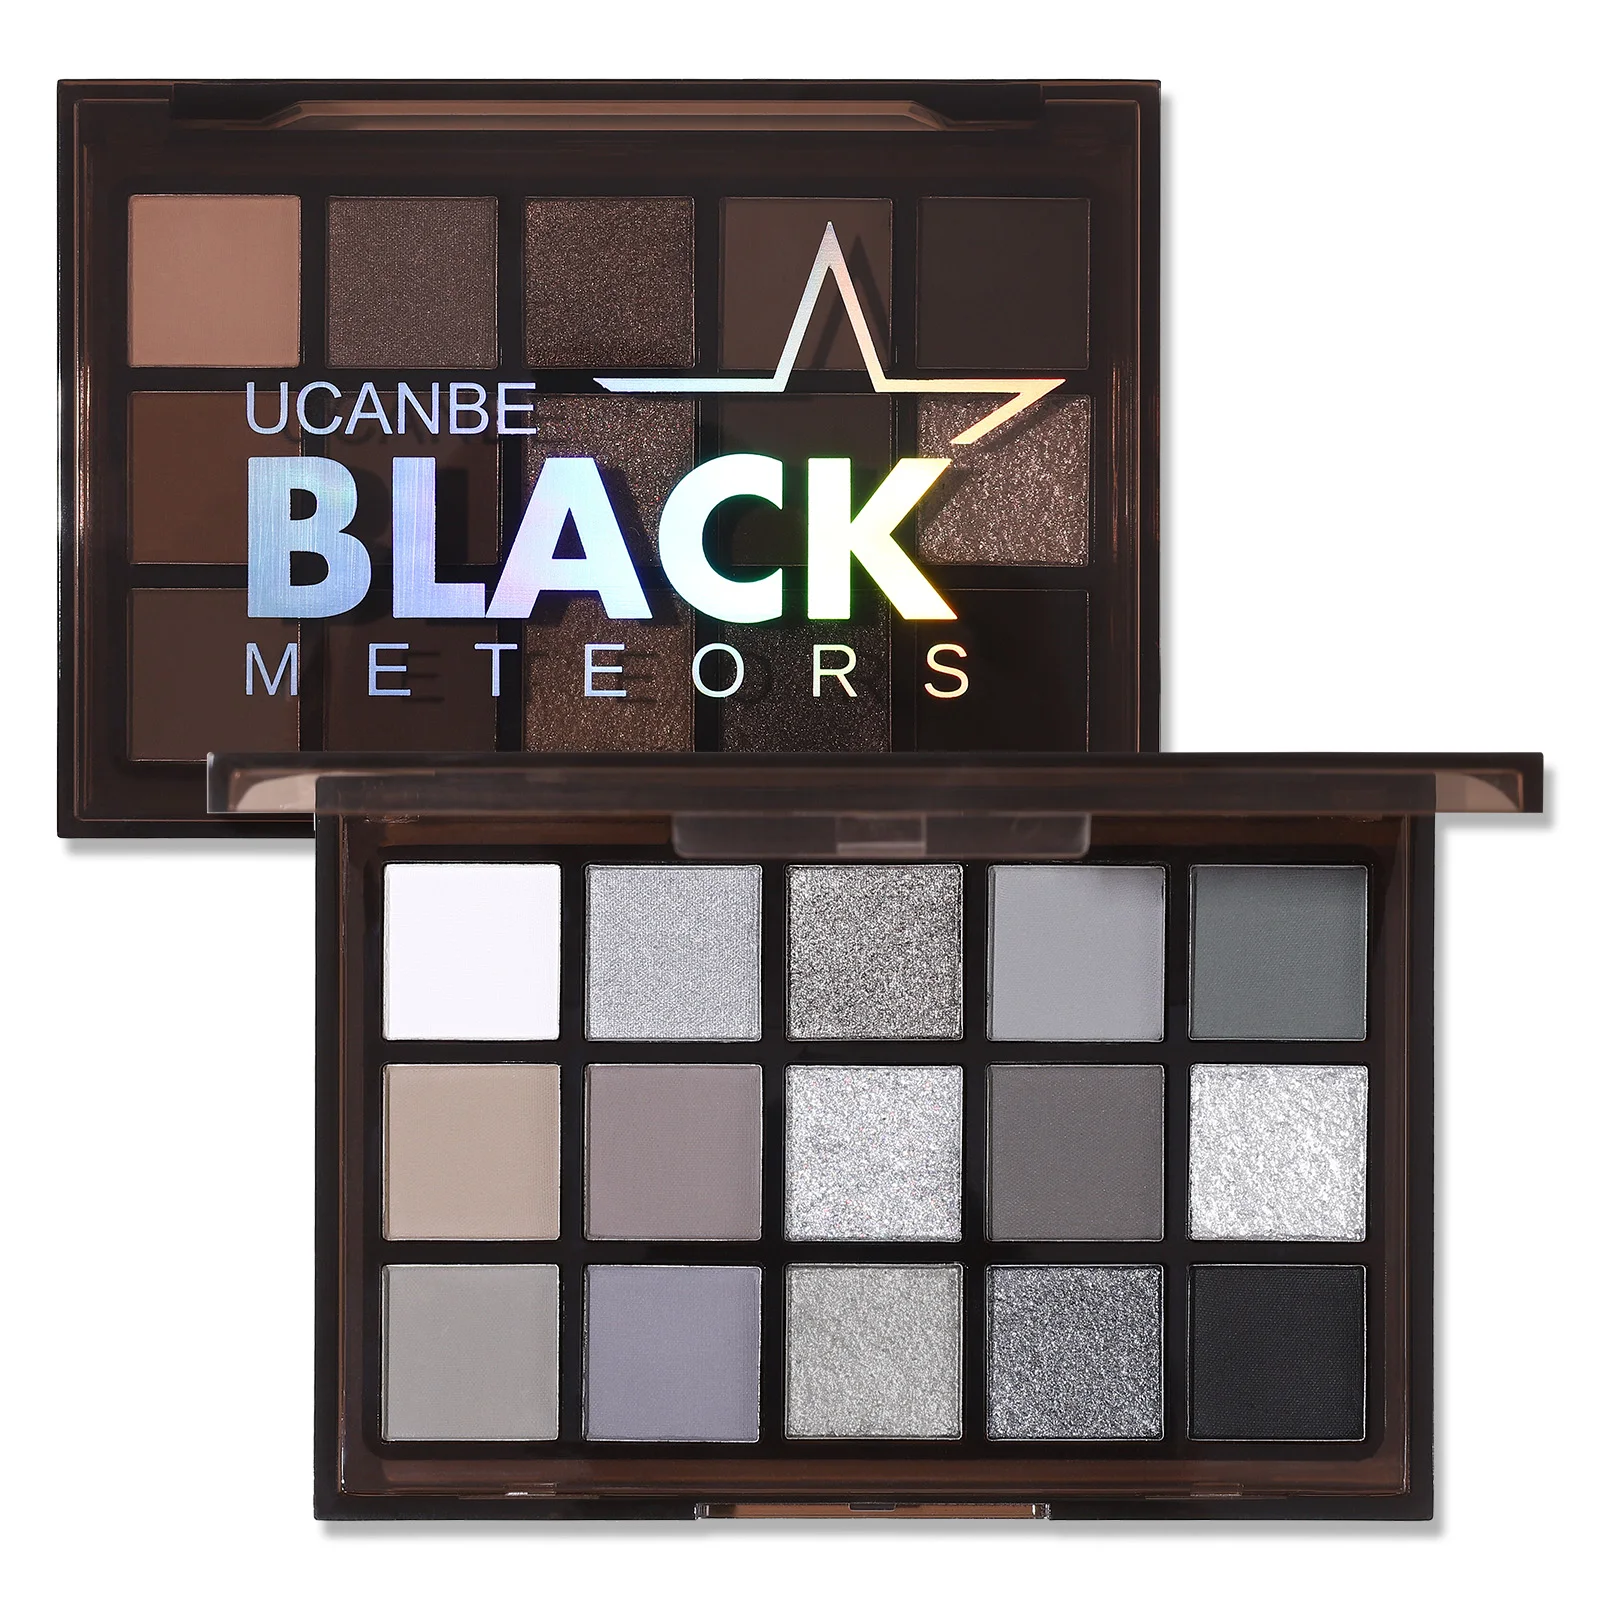 

UCANBE Smokey Black Eyeshadow Palette, 15 Colors Dark Shimmer Matte Metallic Makeup Pallet, High Pigmented Gray Silver